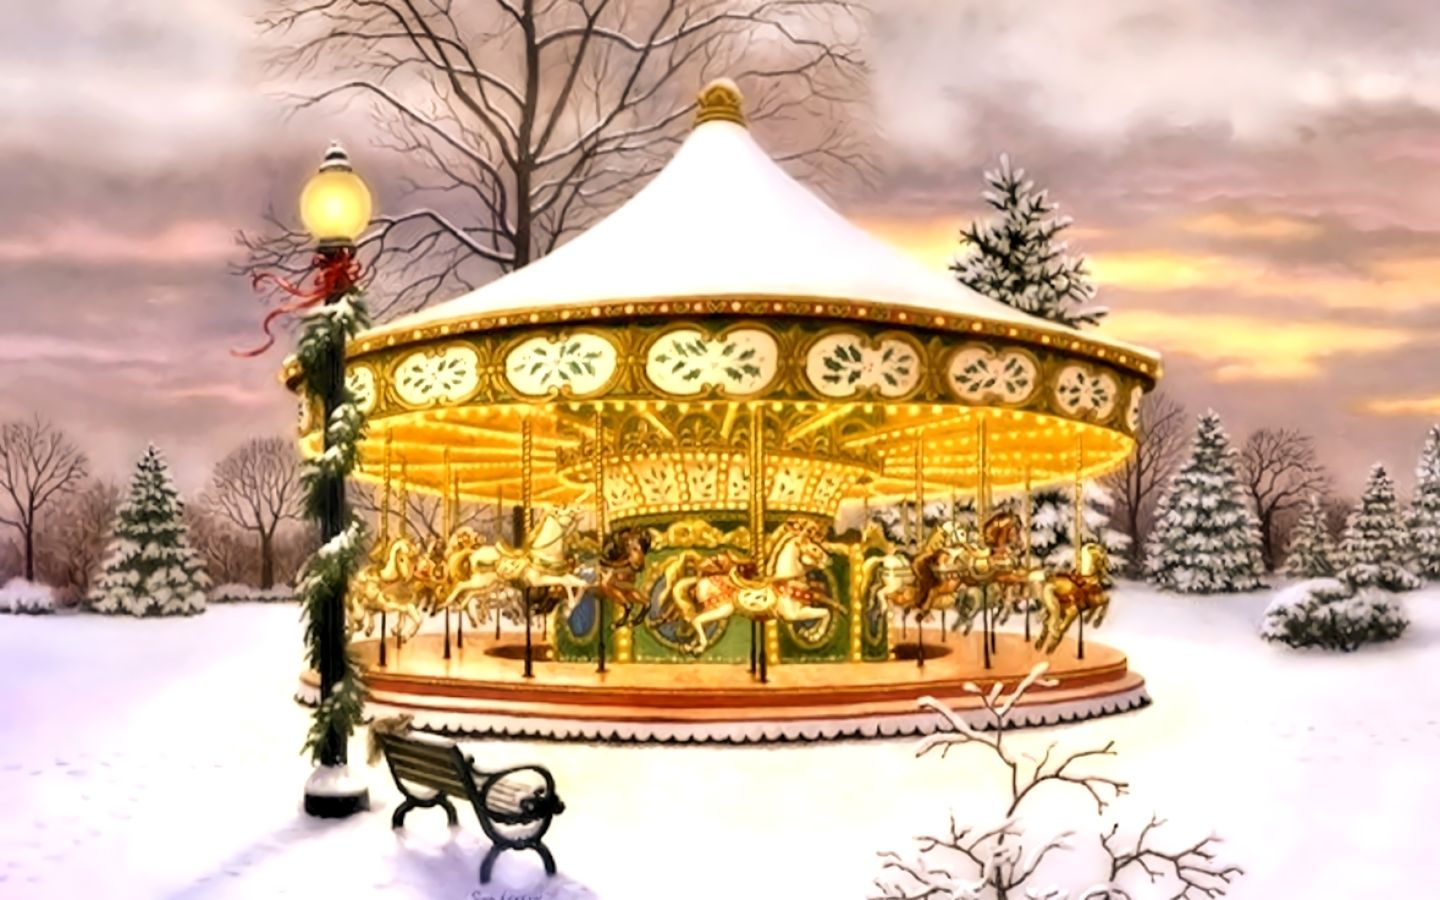 man made, carousel, bench, snow, winter